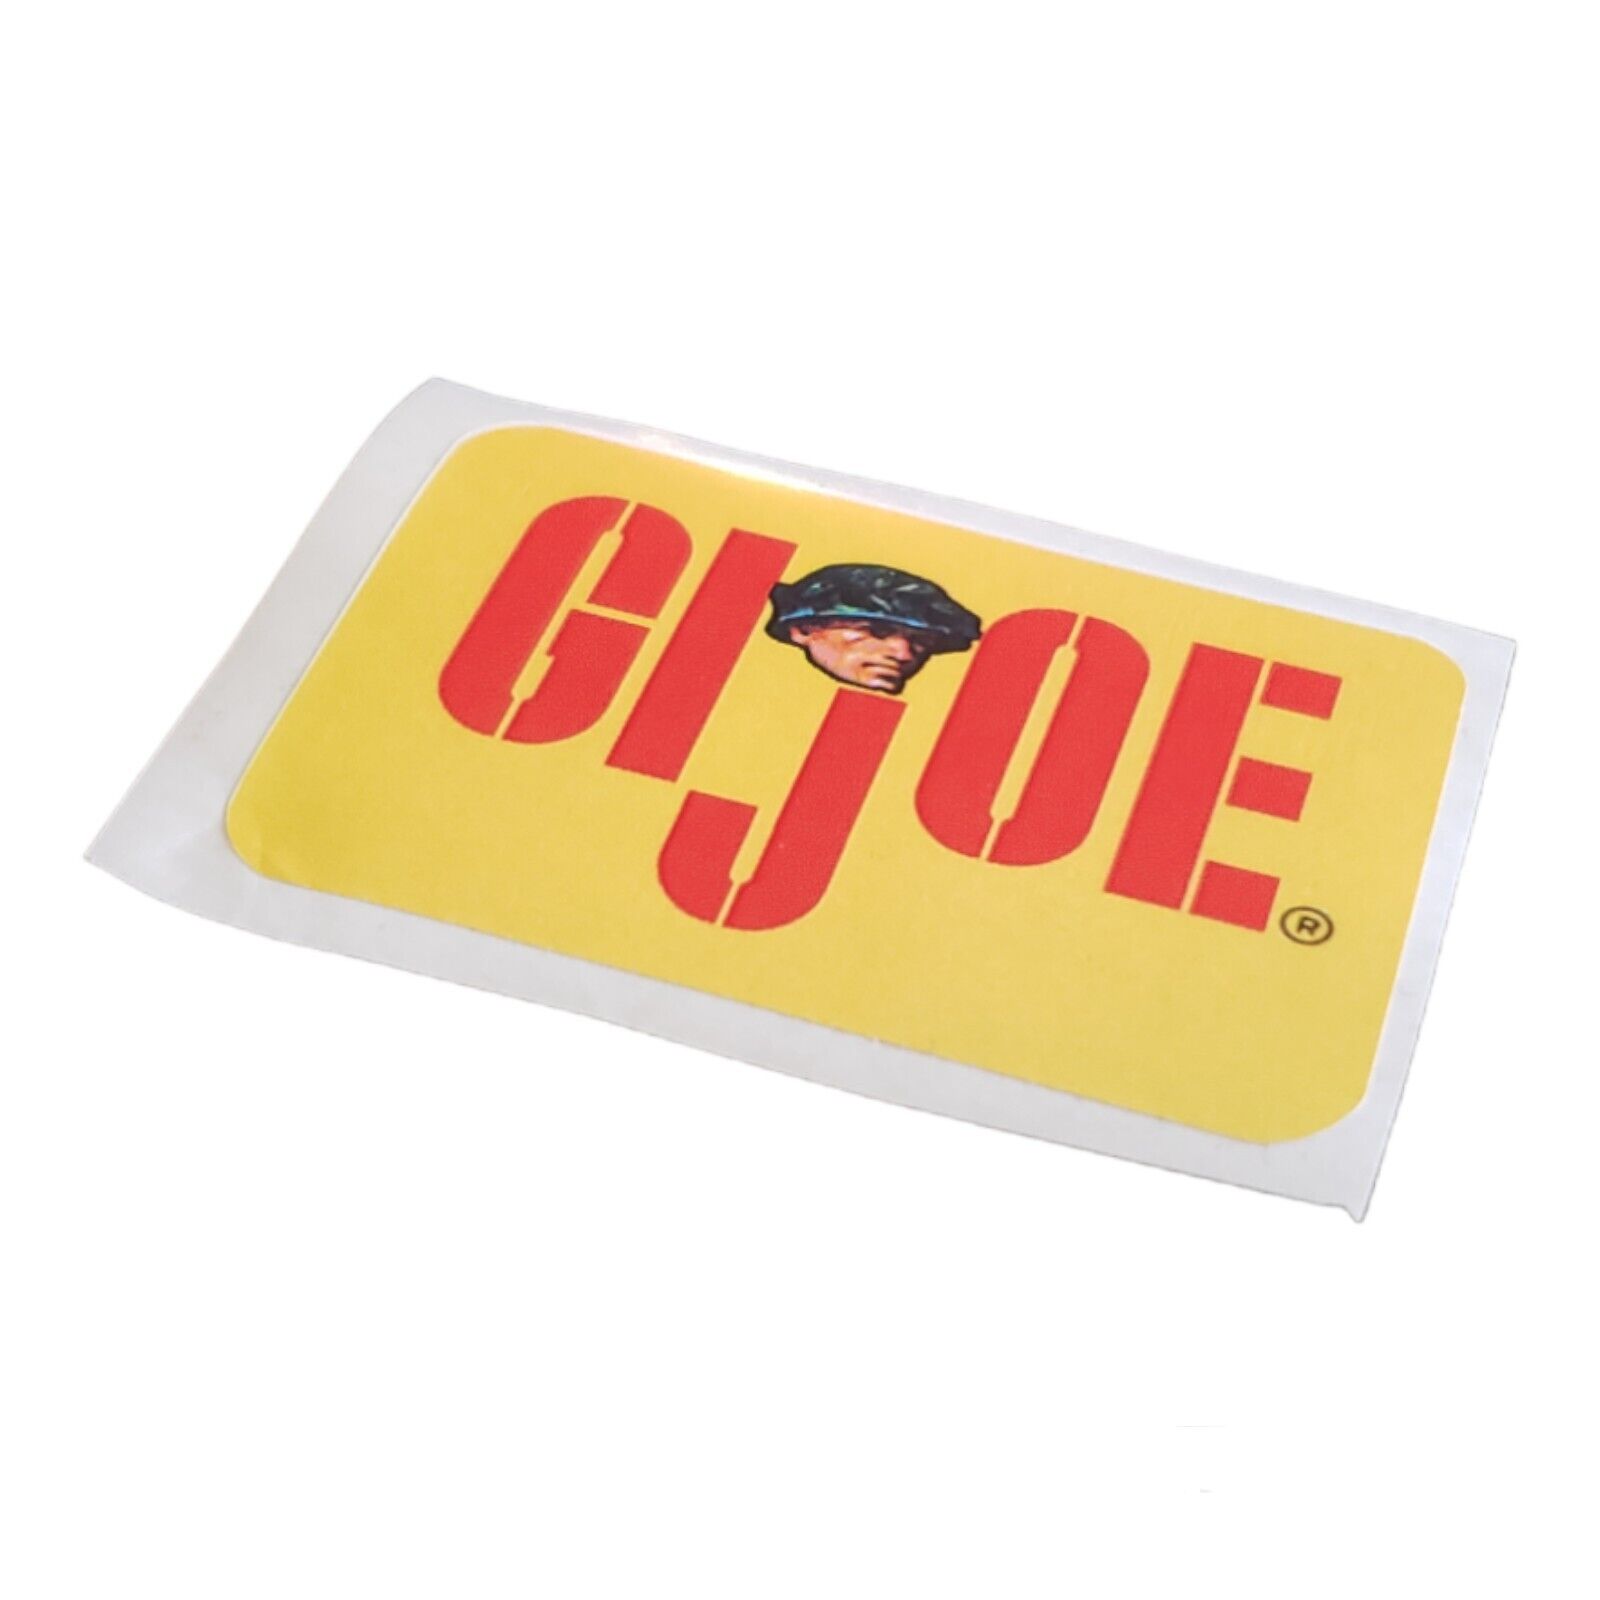 Vintage G.I. Joe Footlocker Sticker replacement  